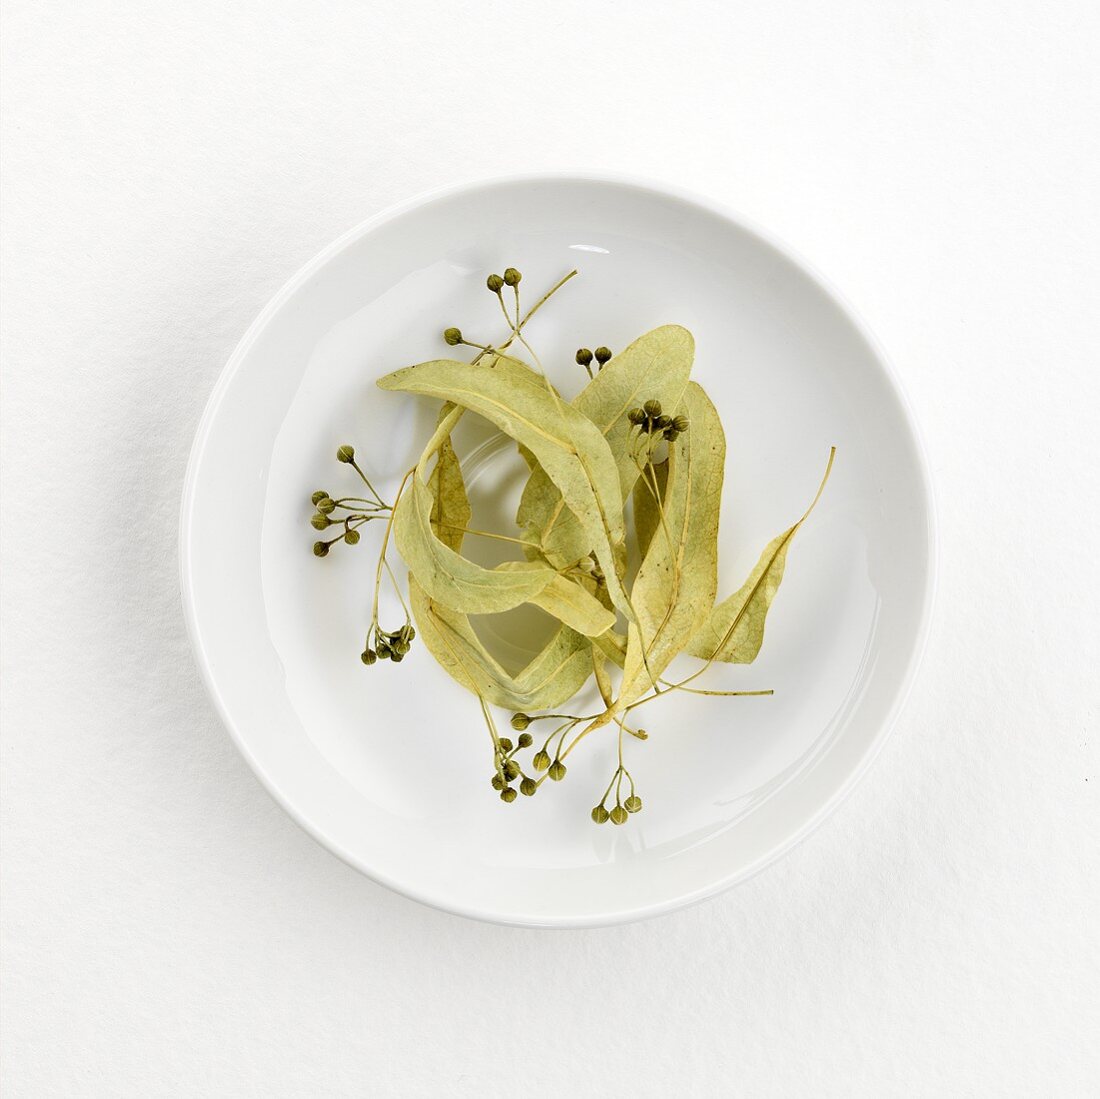 Lime blossom tea (dry) on plate